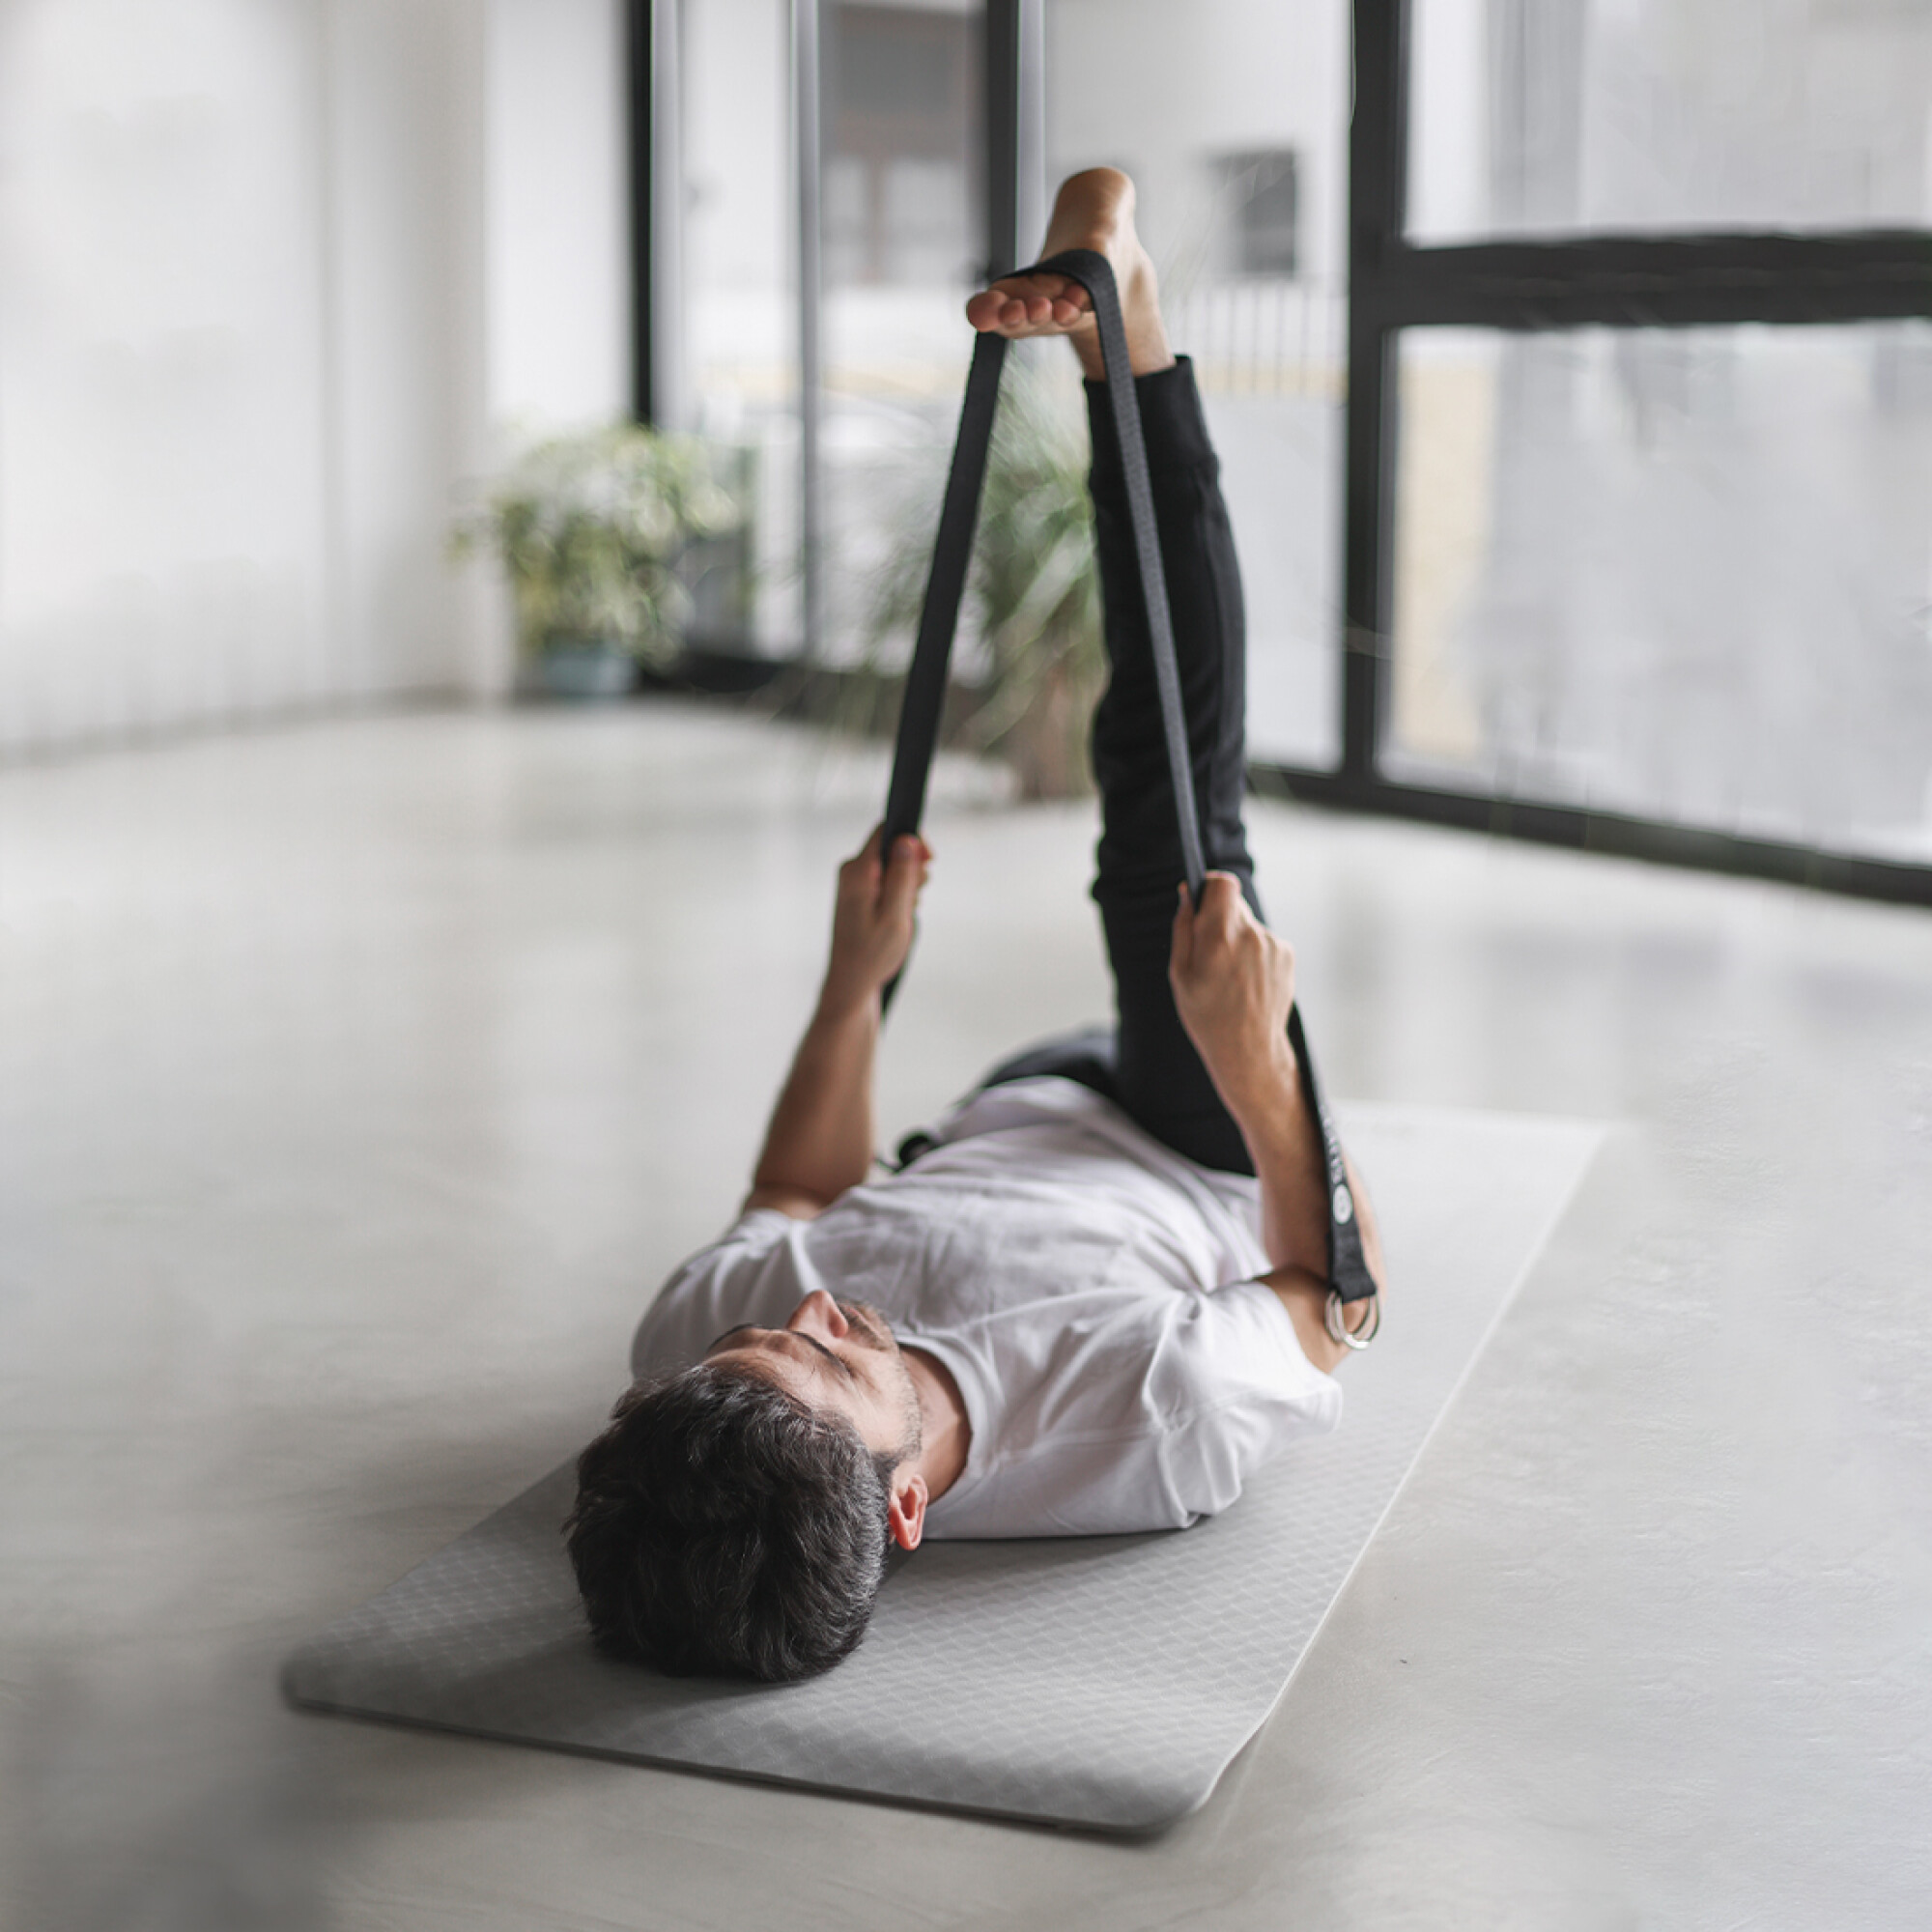 Cinto Cinturón Yoga Fitness Pilates Flexibilidad Strap 180Cm